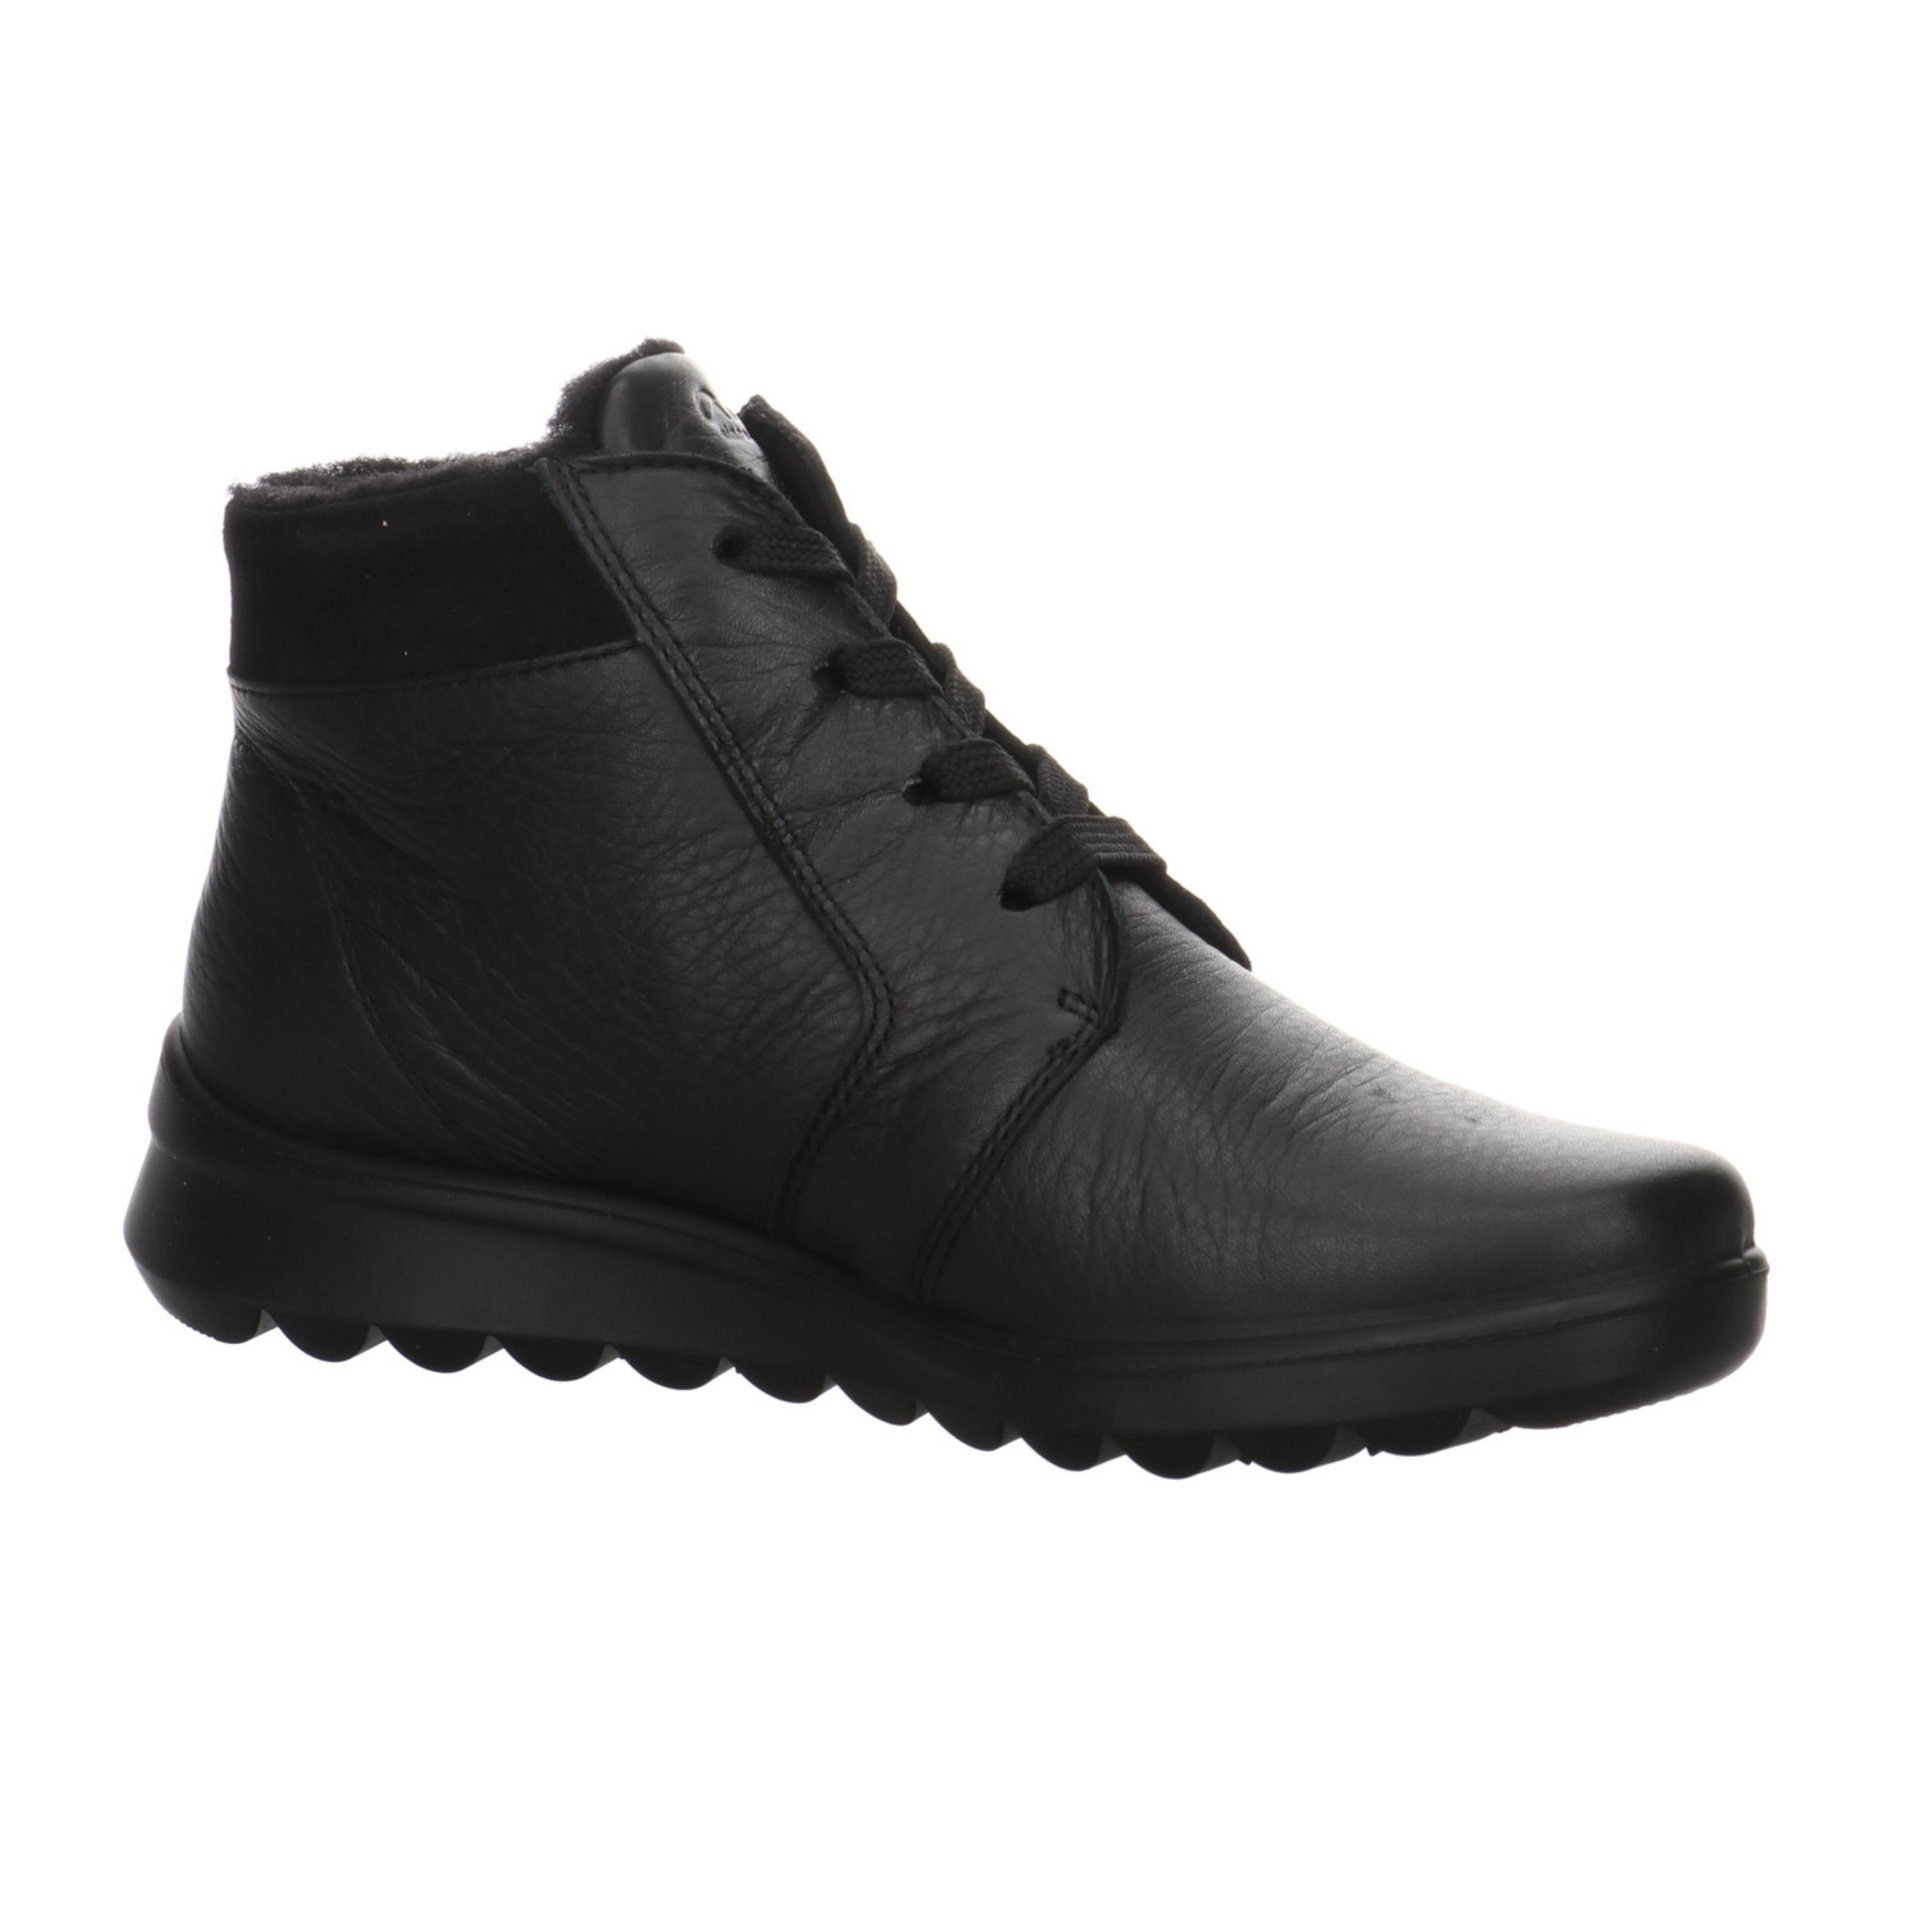 Stiefelette Toronto Damen Stiefel Boots Ara Lederkombination Schuhe 046874 schwarz